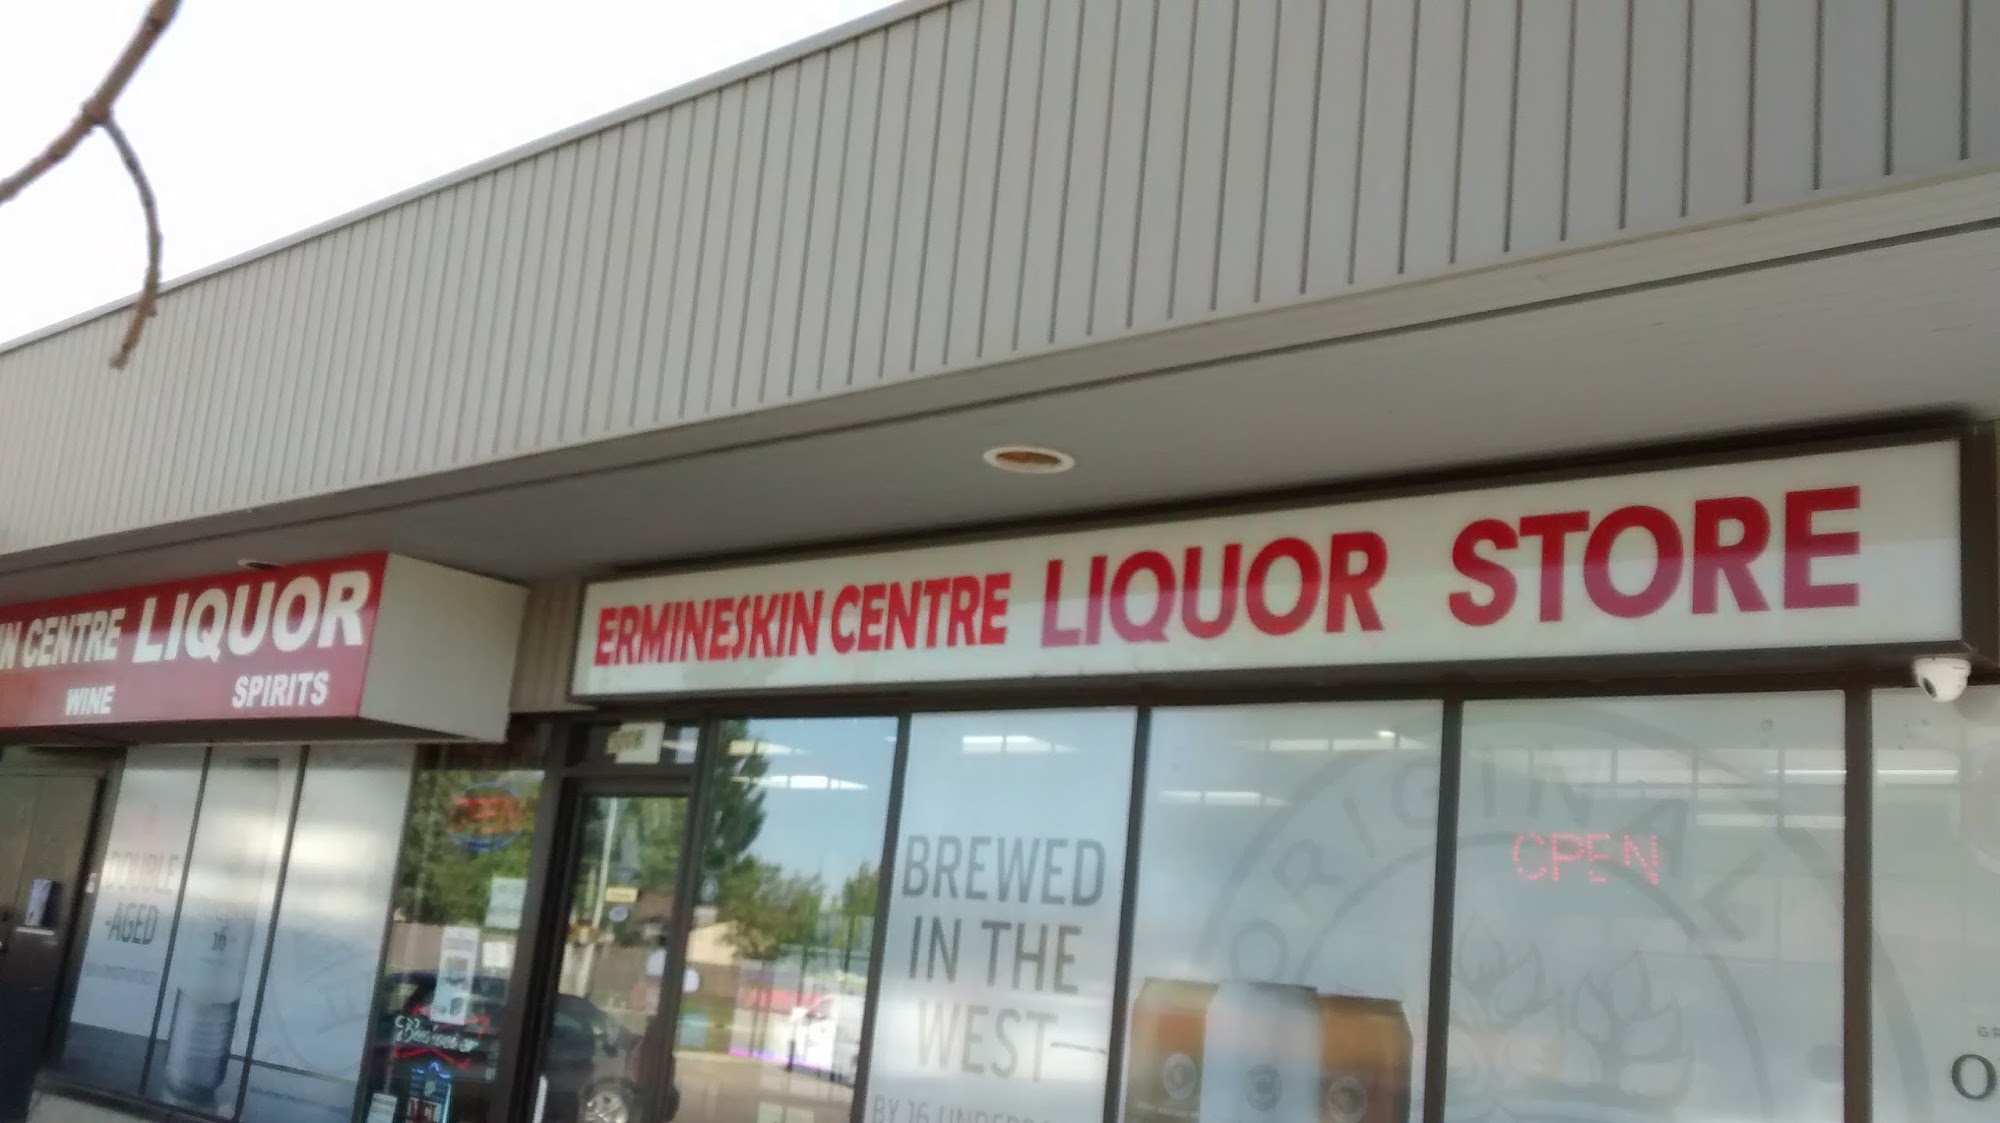 Ermineskin Centre Liquor Store